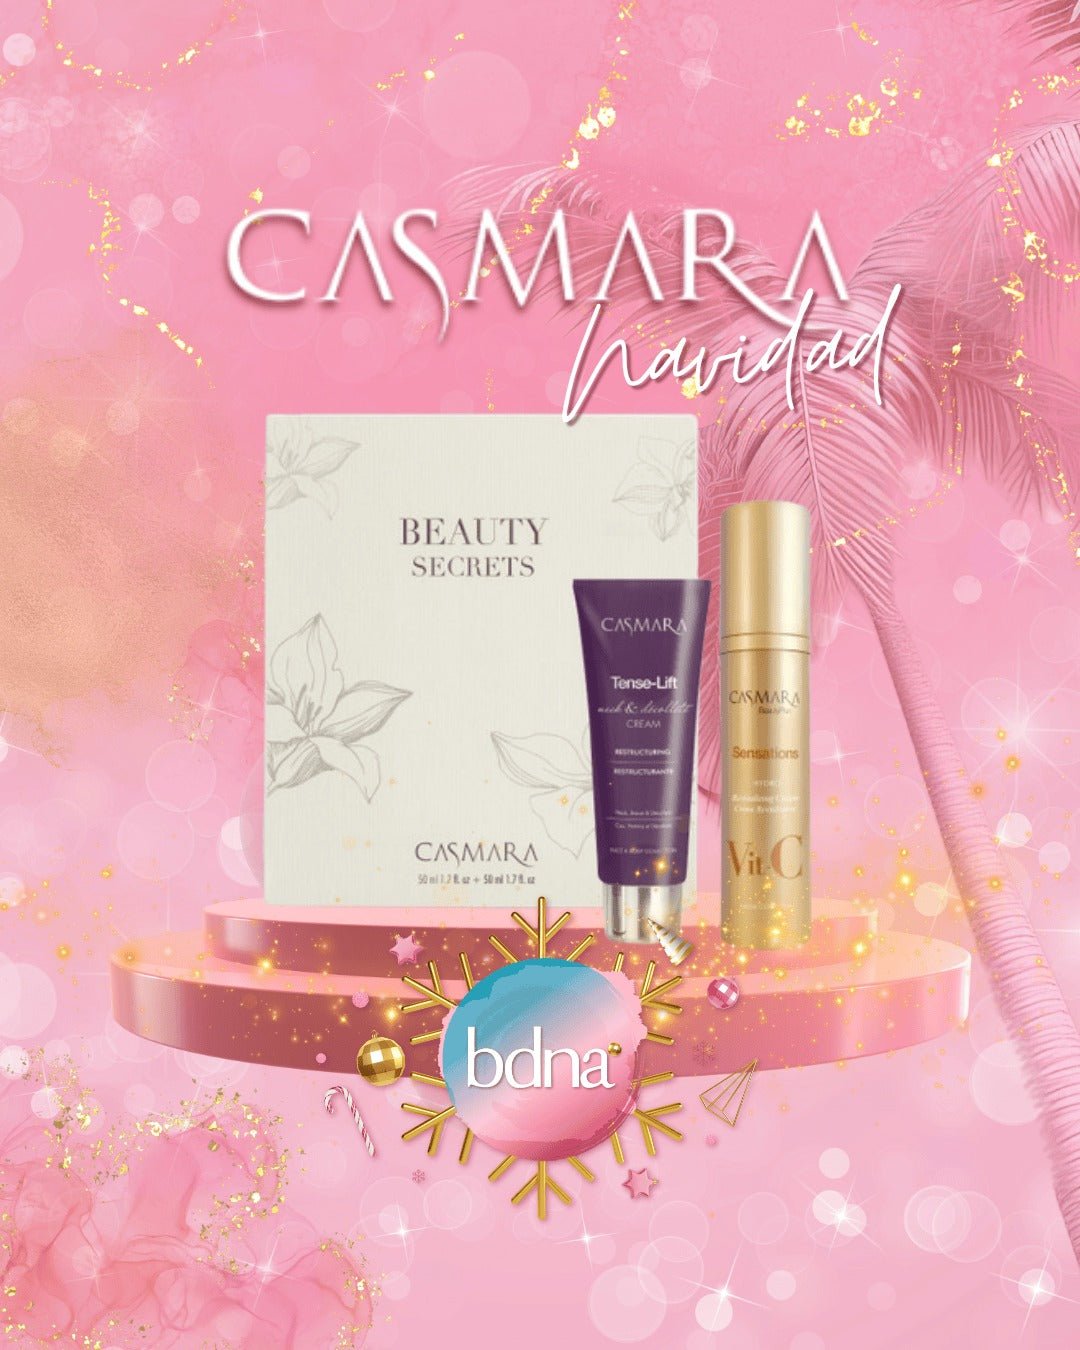 Beauty Secrets Sensations - CASMARA - Badana